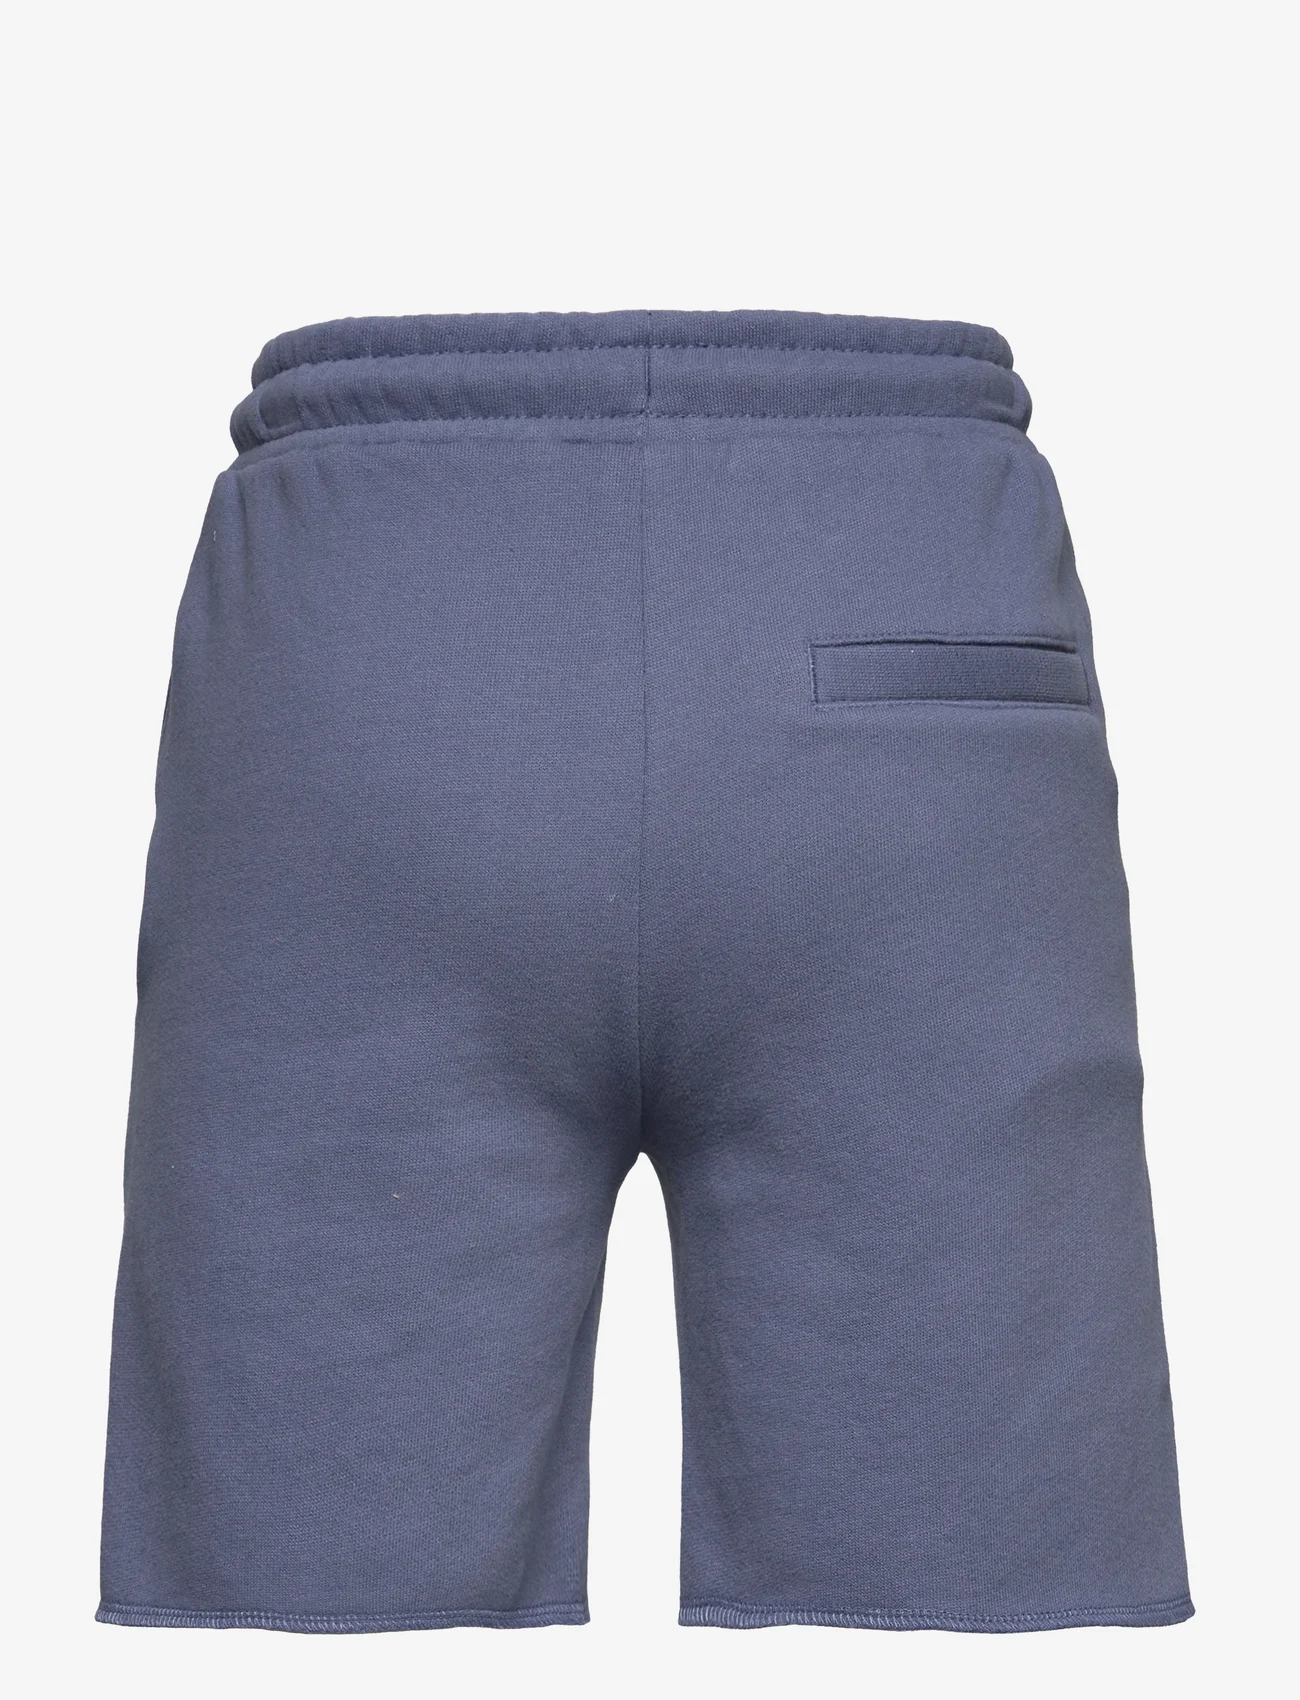 Knowledge Cotton Apparel - Sweat shorts - GOTS/Vegan - mjukisshorts - moonlight blue - 1